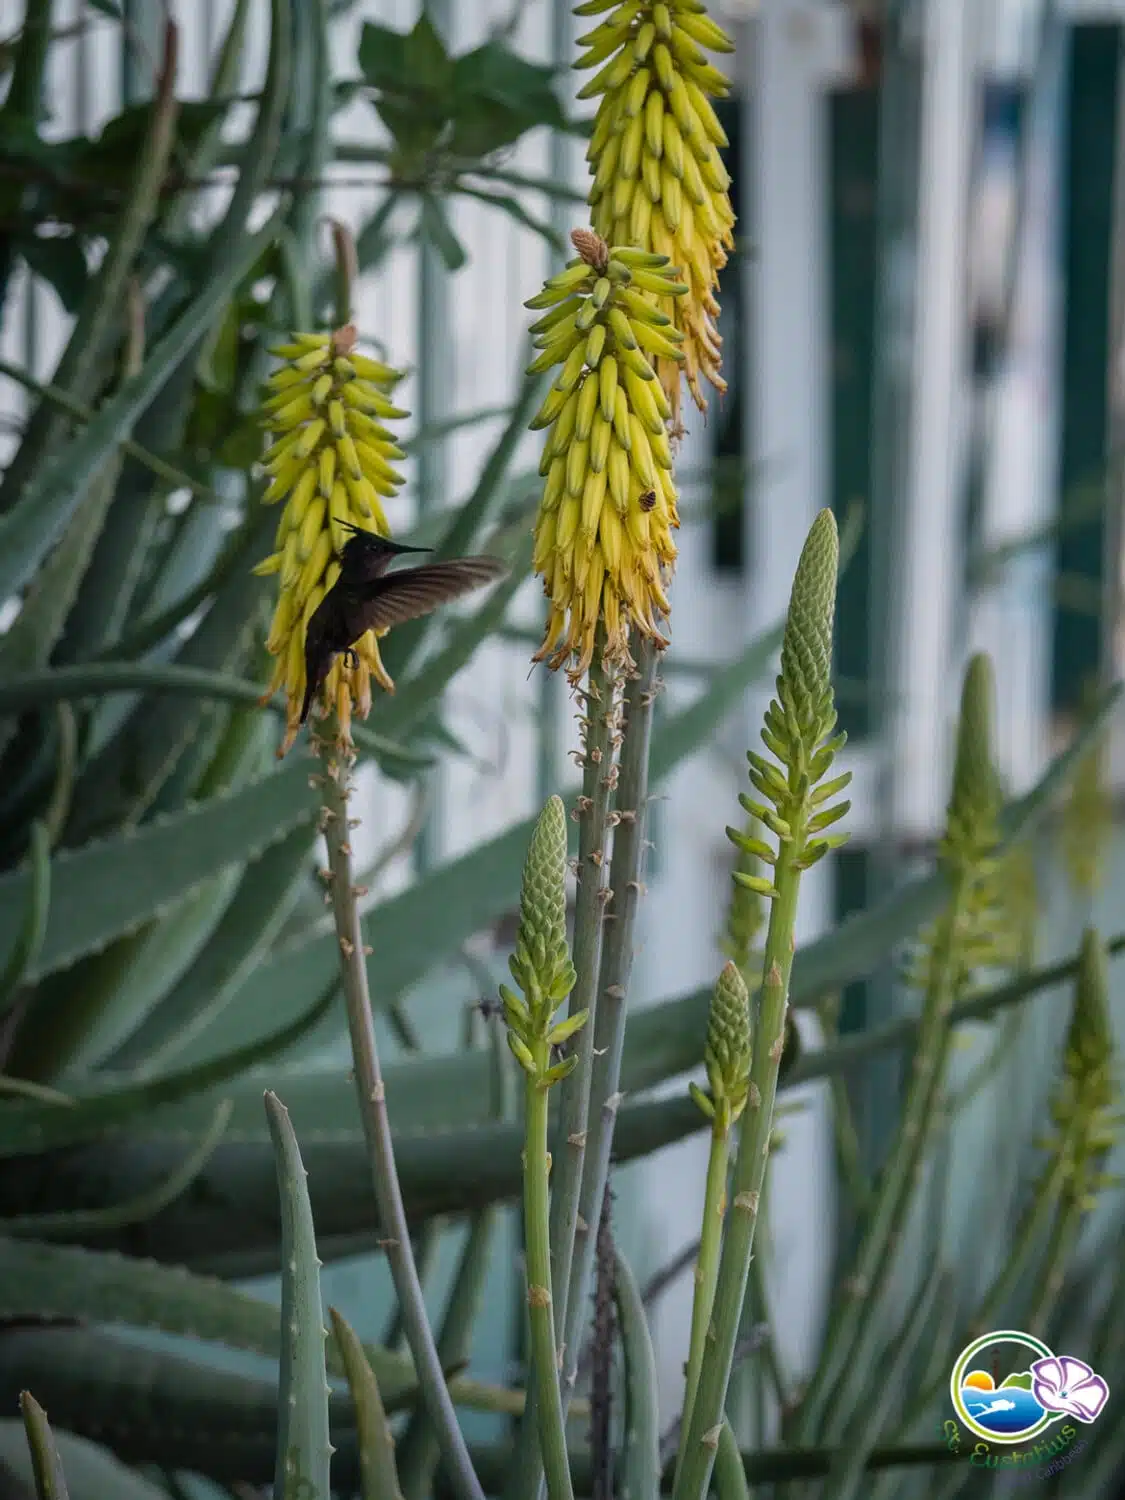 Hummingbird at Aloe vera plants in front of STENAPA‘s office (photographer: Nicola Jaeger)